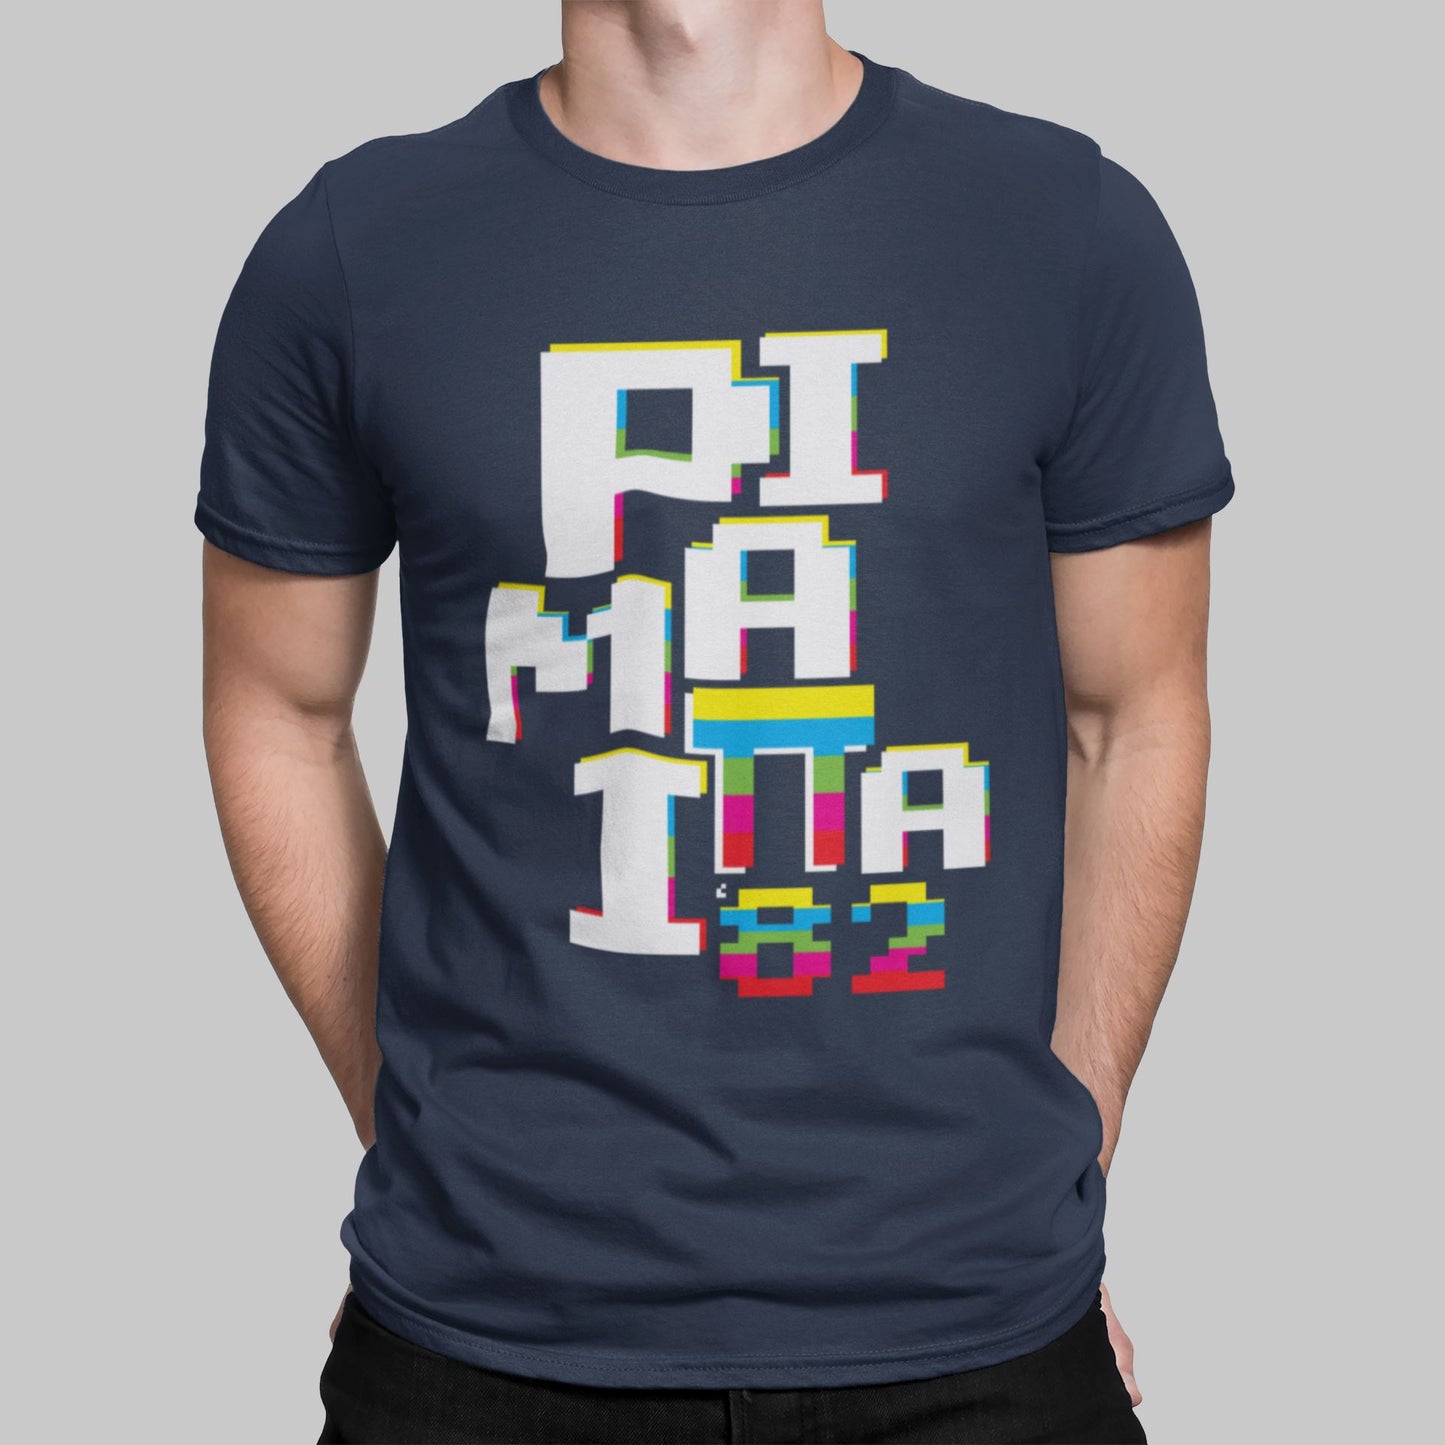 Pimania Retro Gaming T-Shirt T-Shirt Seven Squared Small 34-36" Navy 